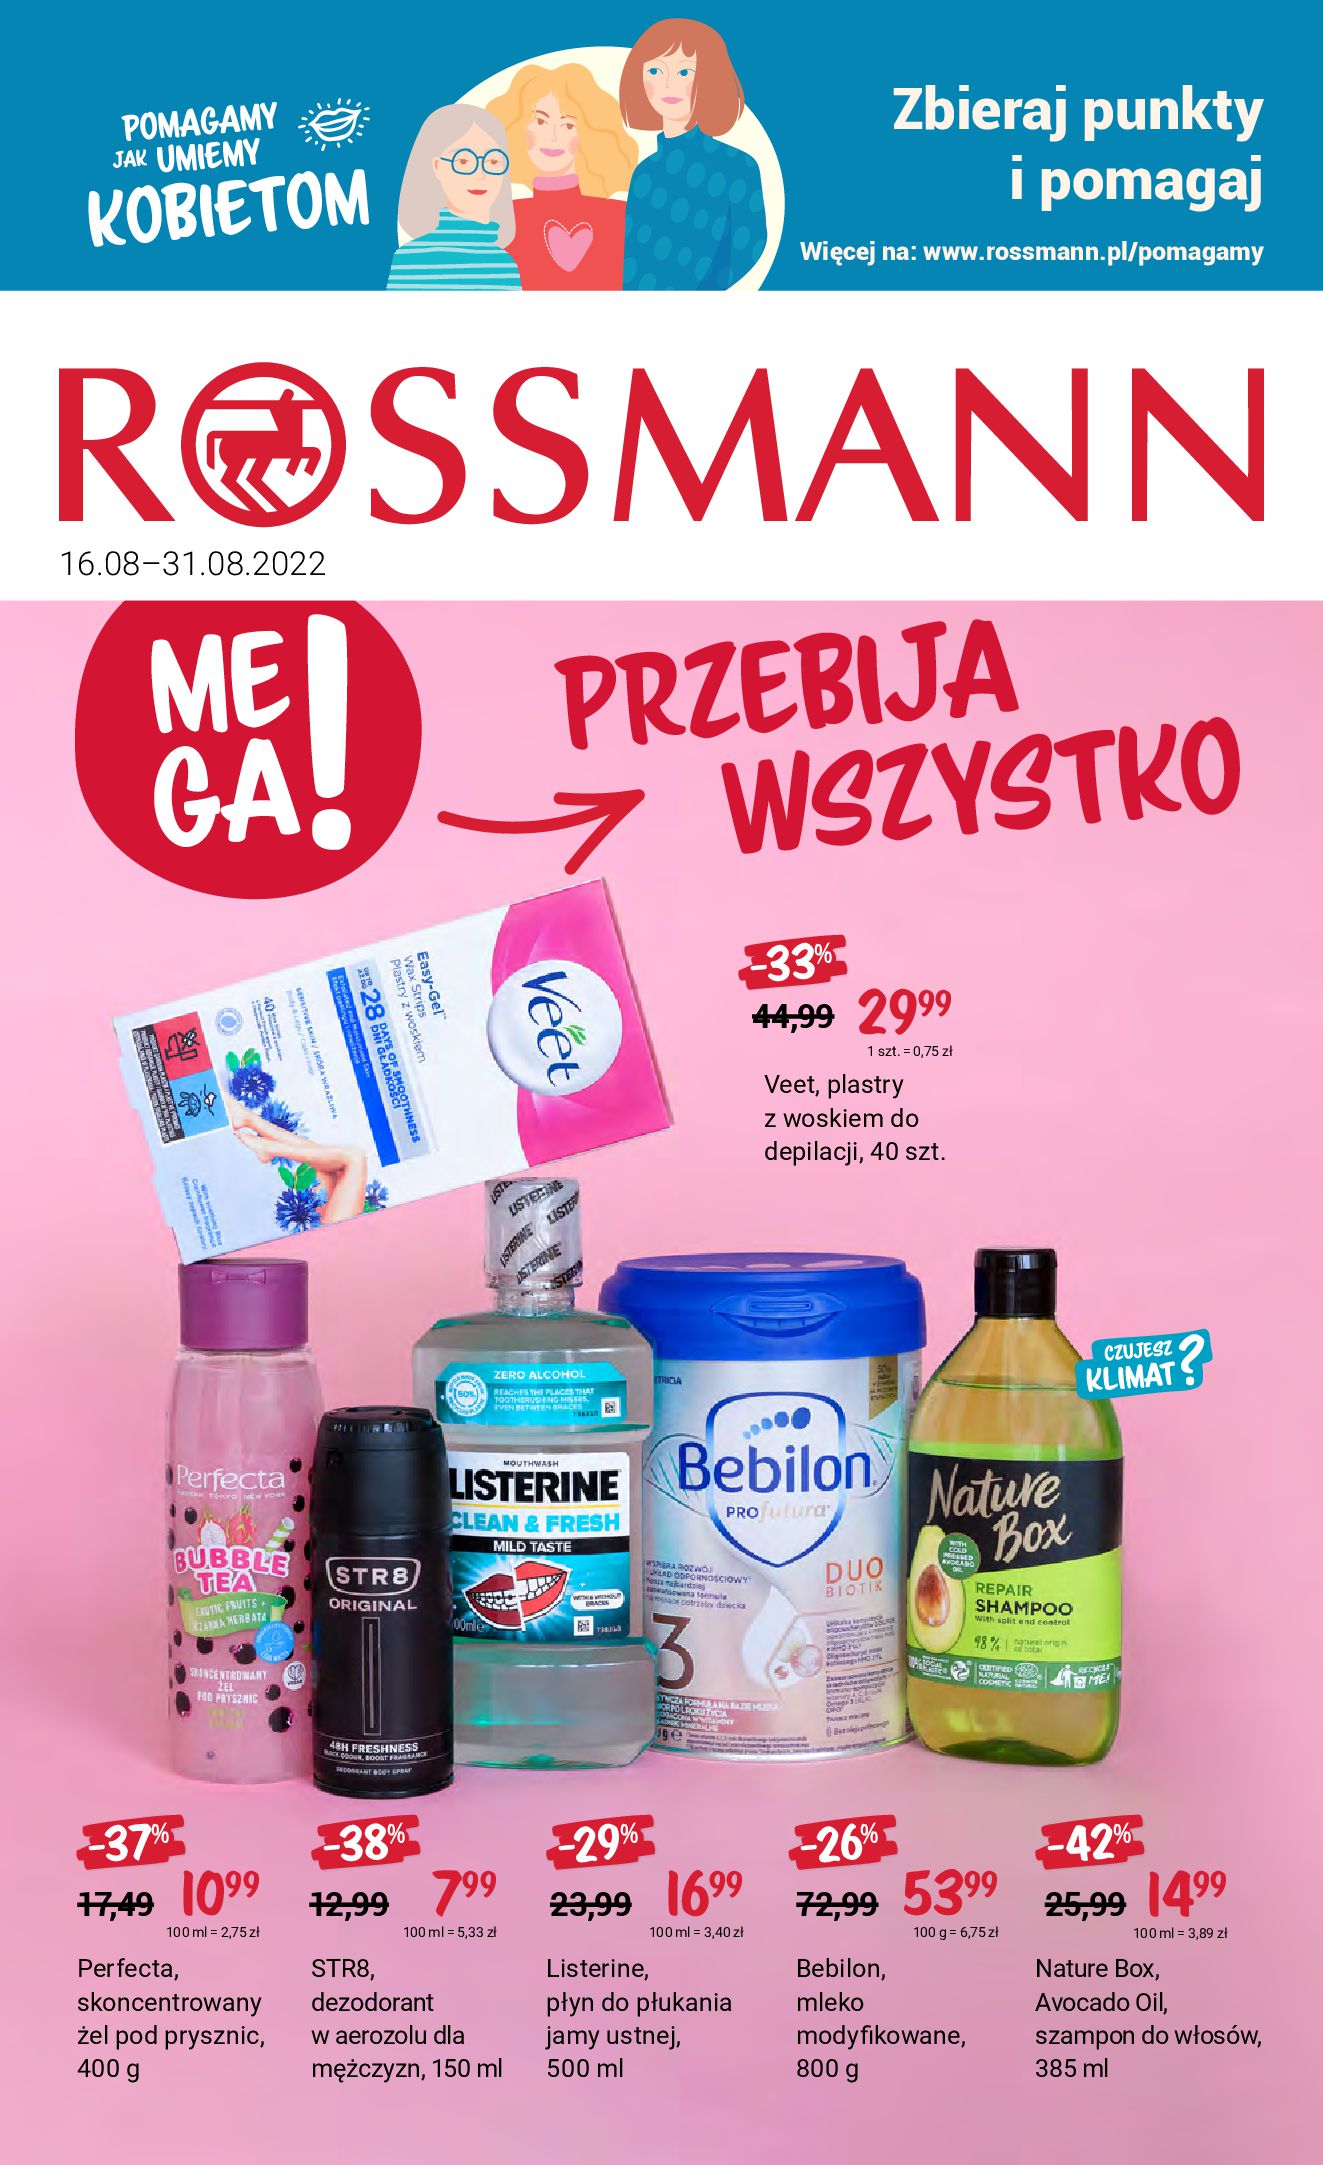 Rossmann:  Gazetka Rossmann od 16.08 15.08.2022